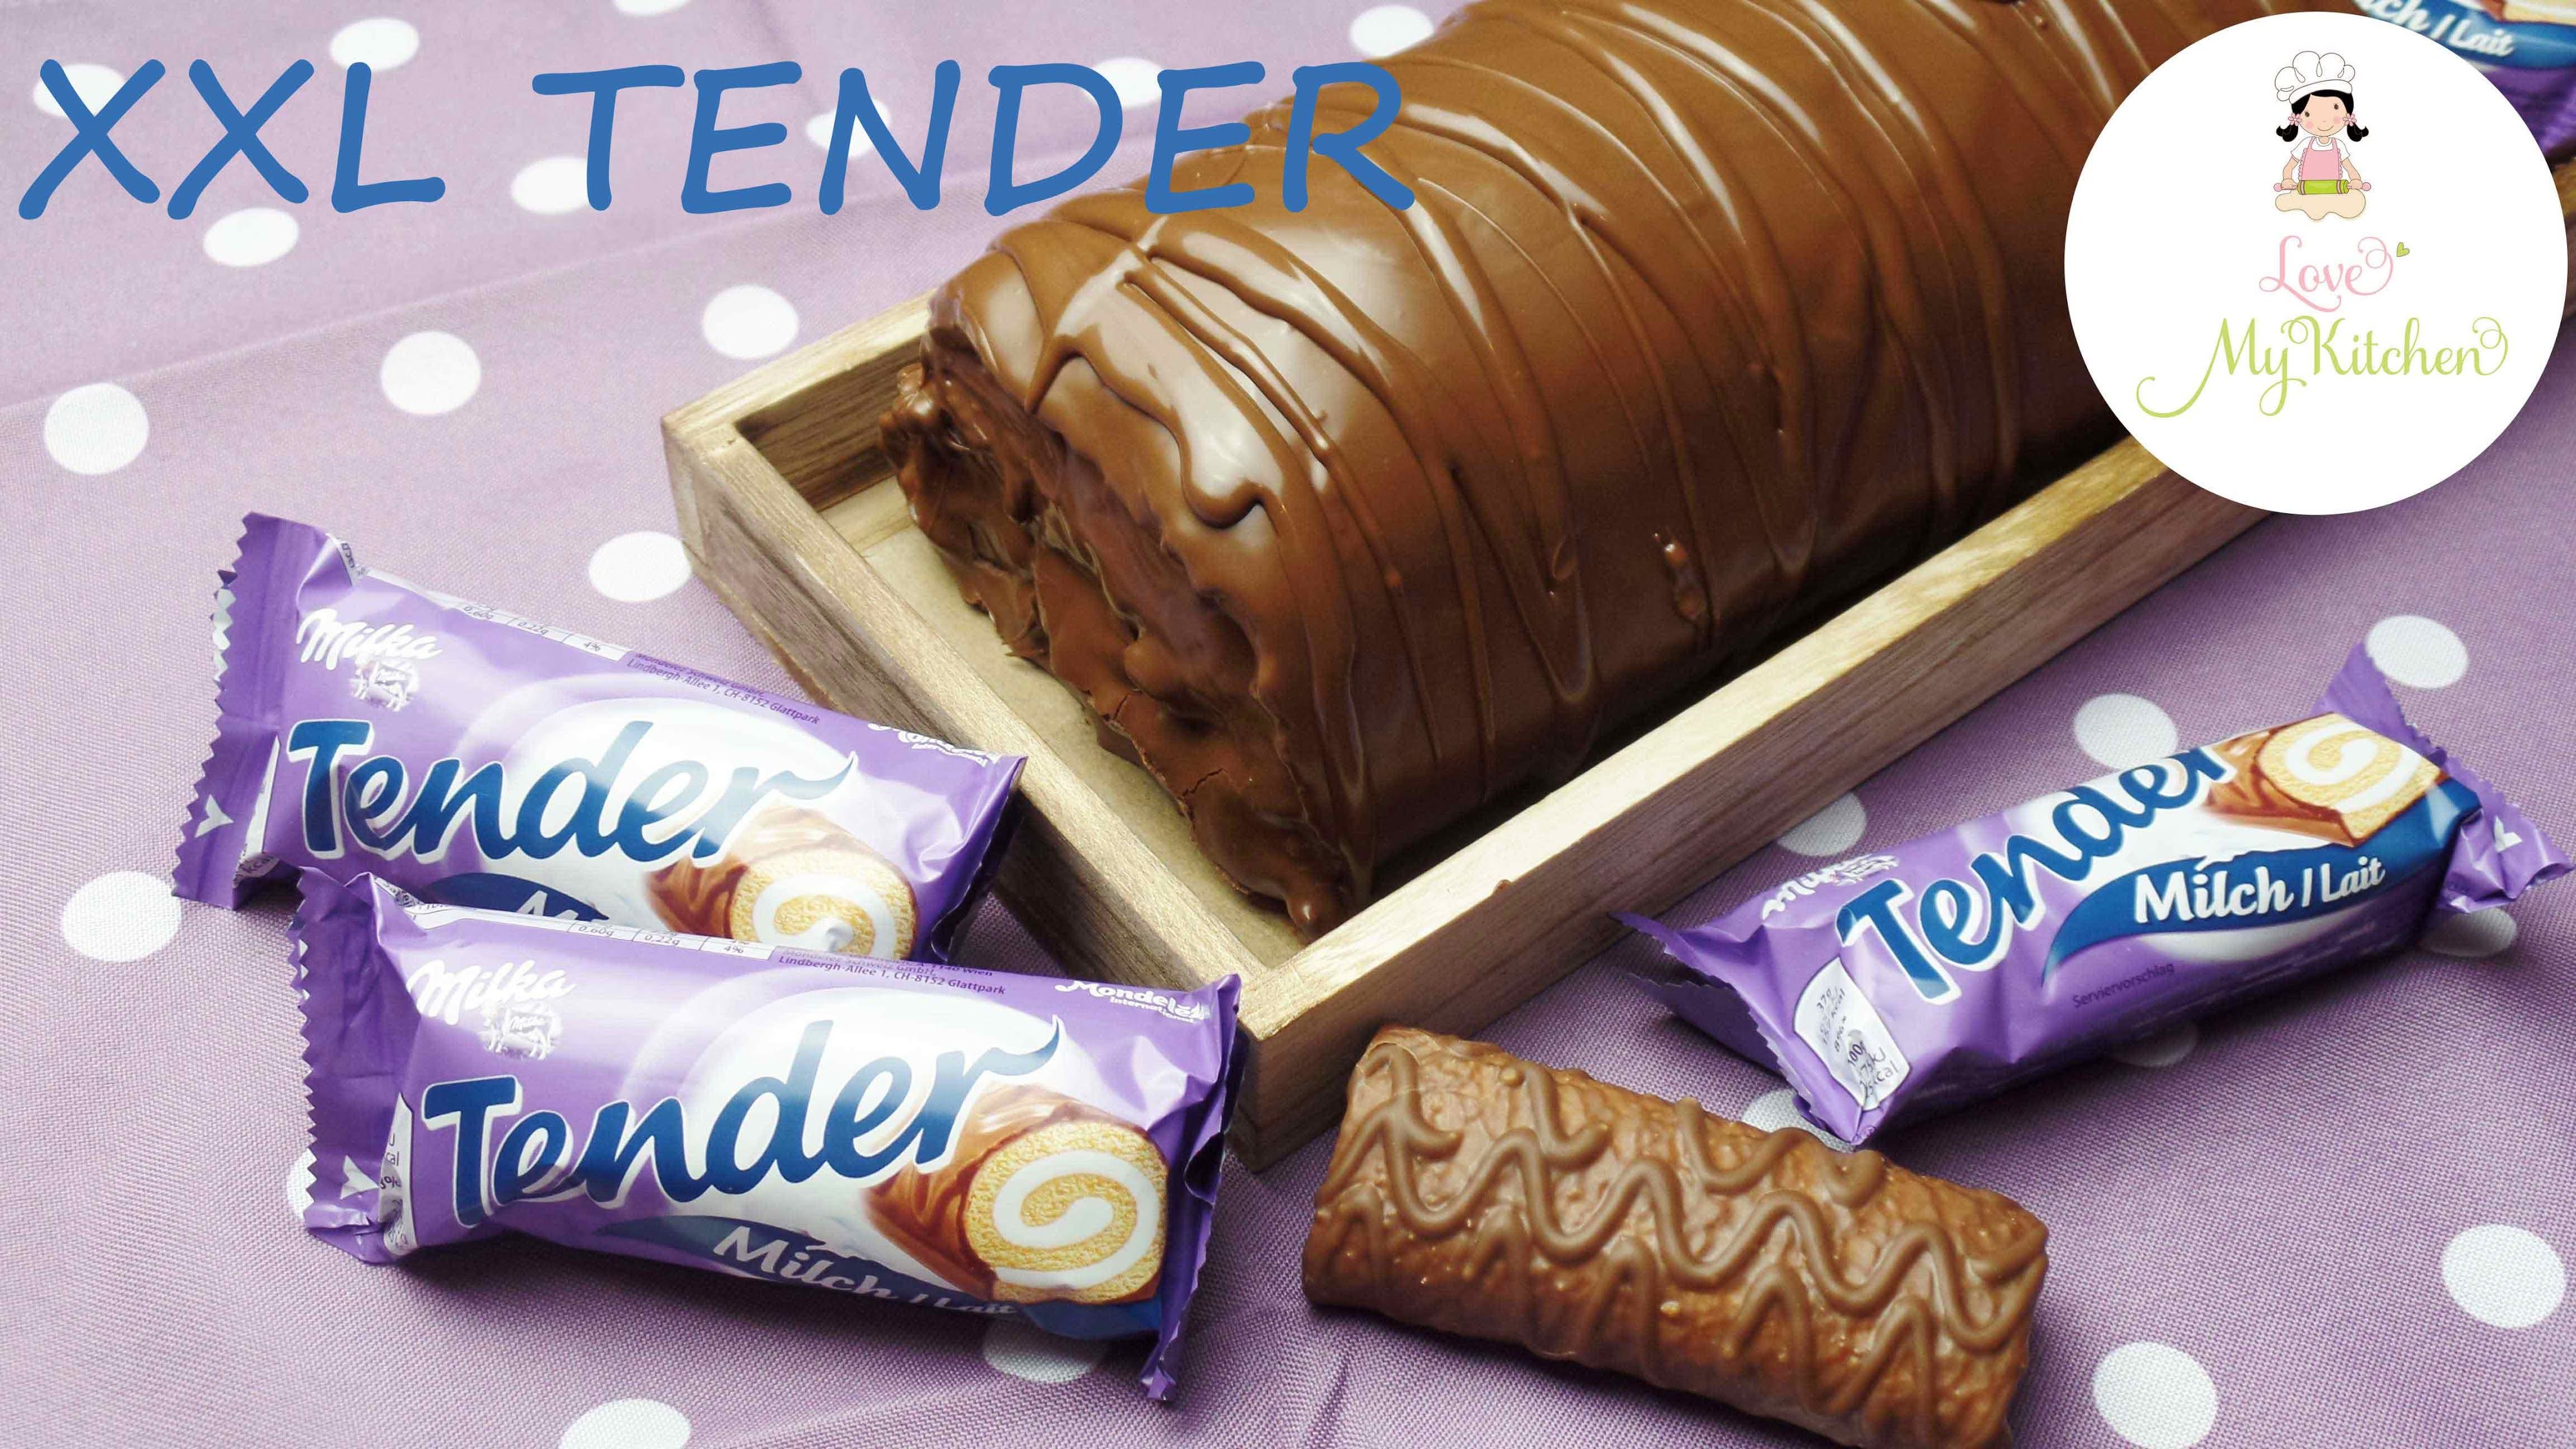 DIY | XXL Tender | Tender Torte | AMAZING CAKE | lecker | Schokorolle